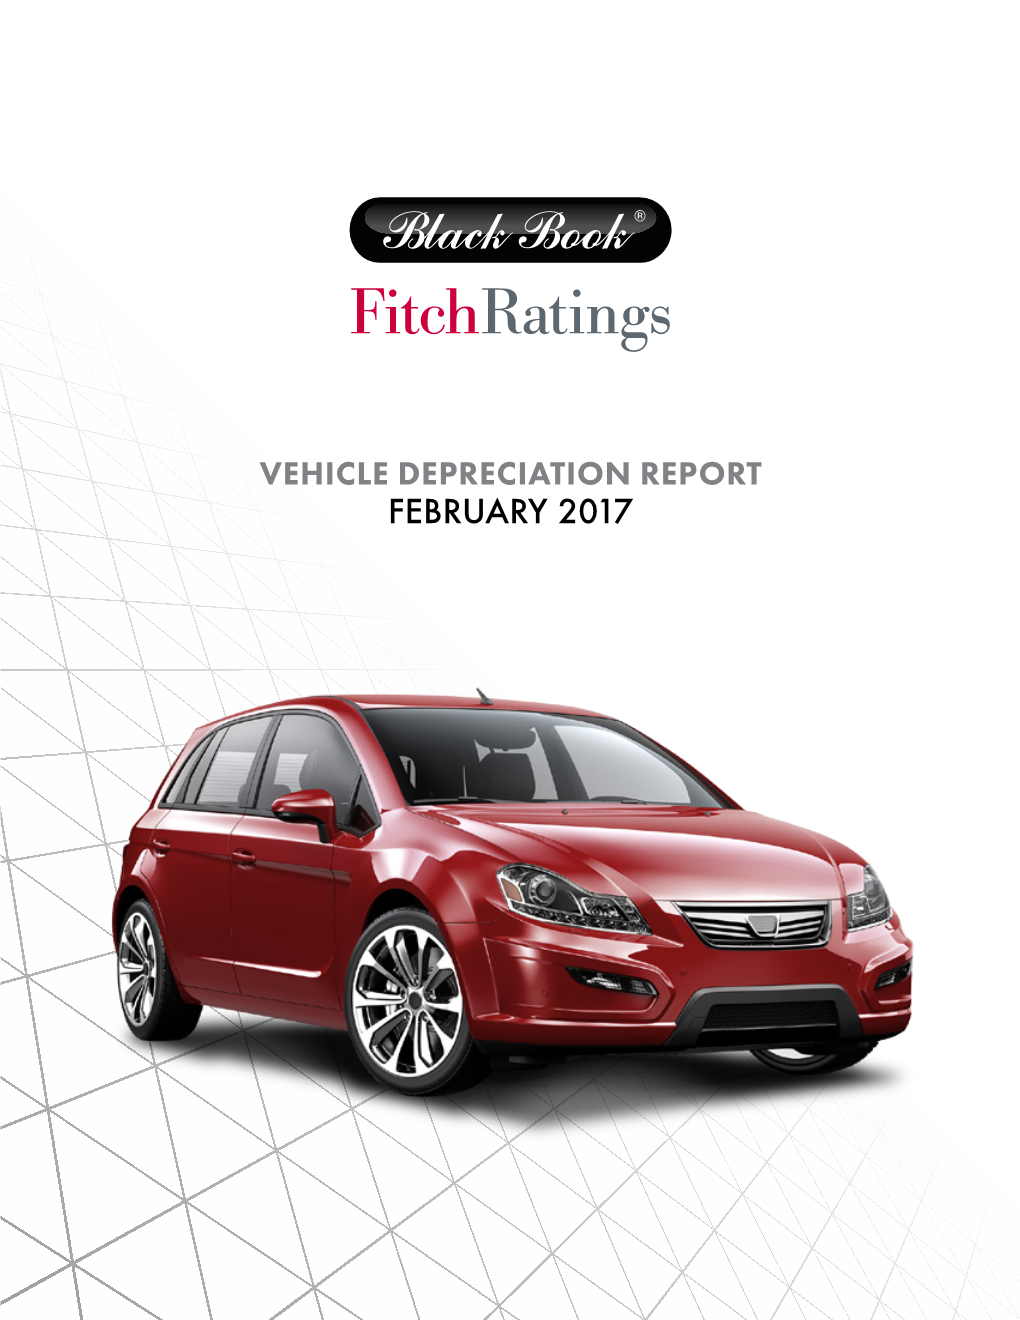 Vehicle Depreciation Report February 2017